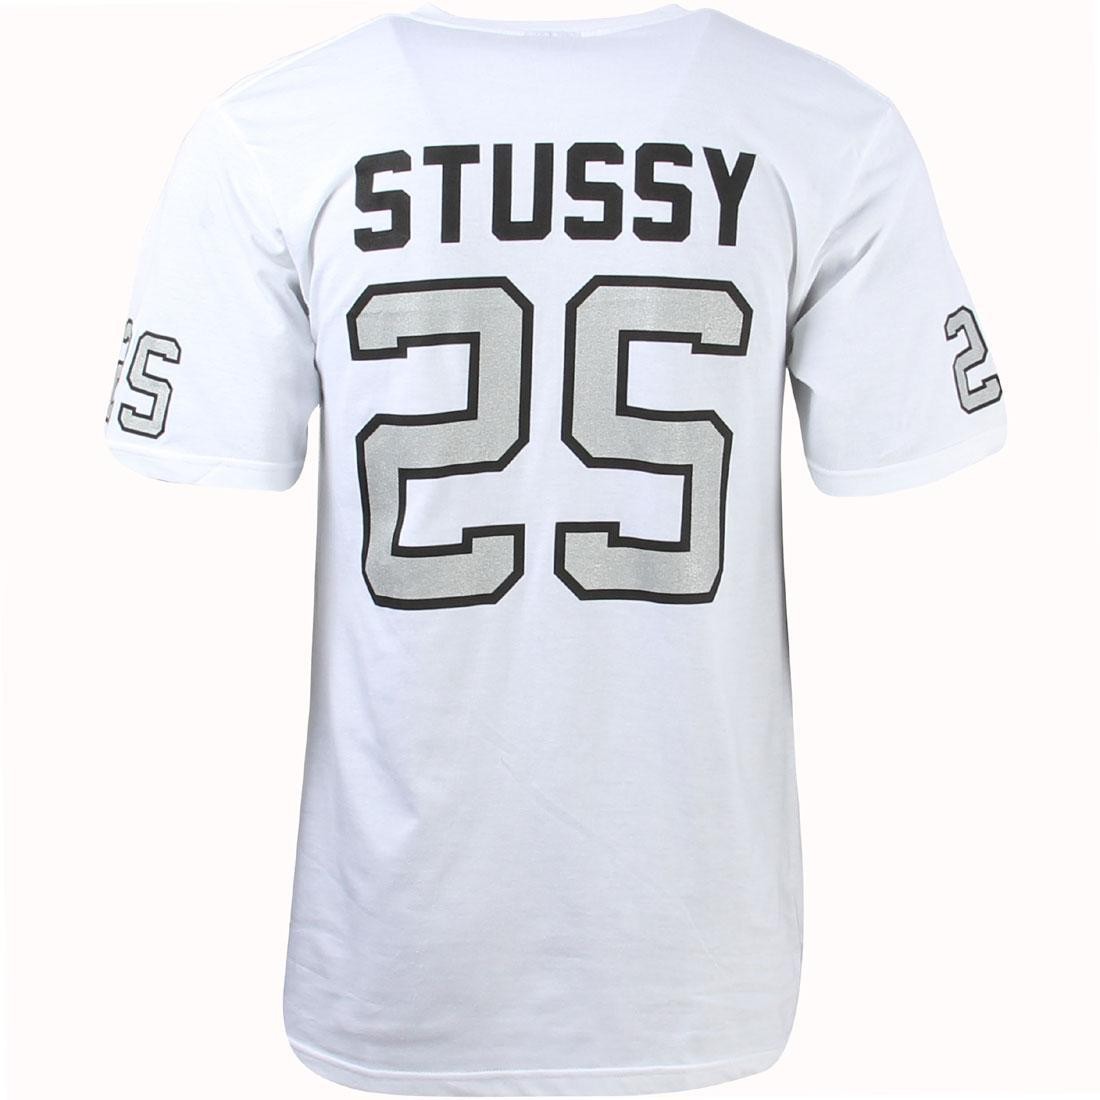 Stussy Men SS Jersey Tee white